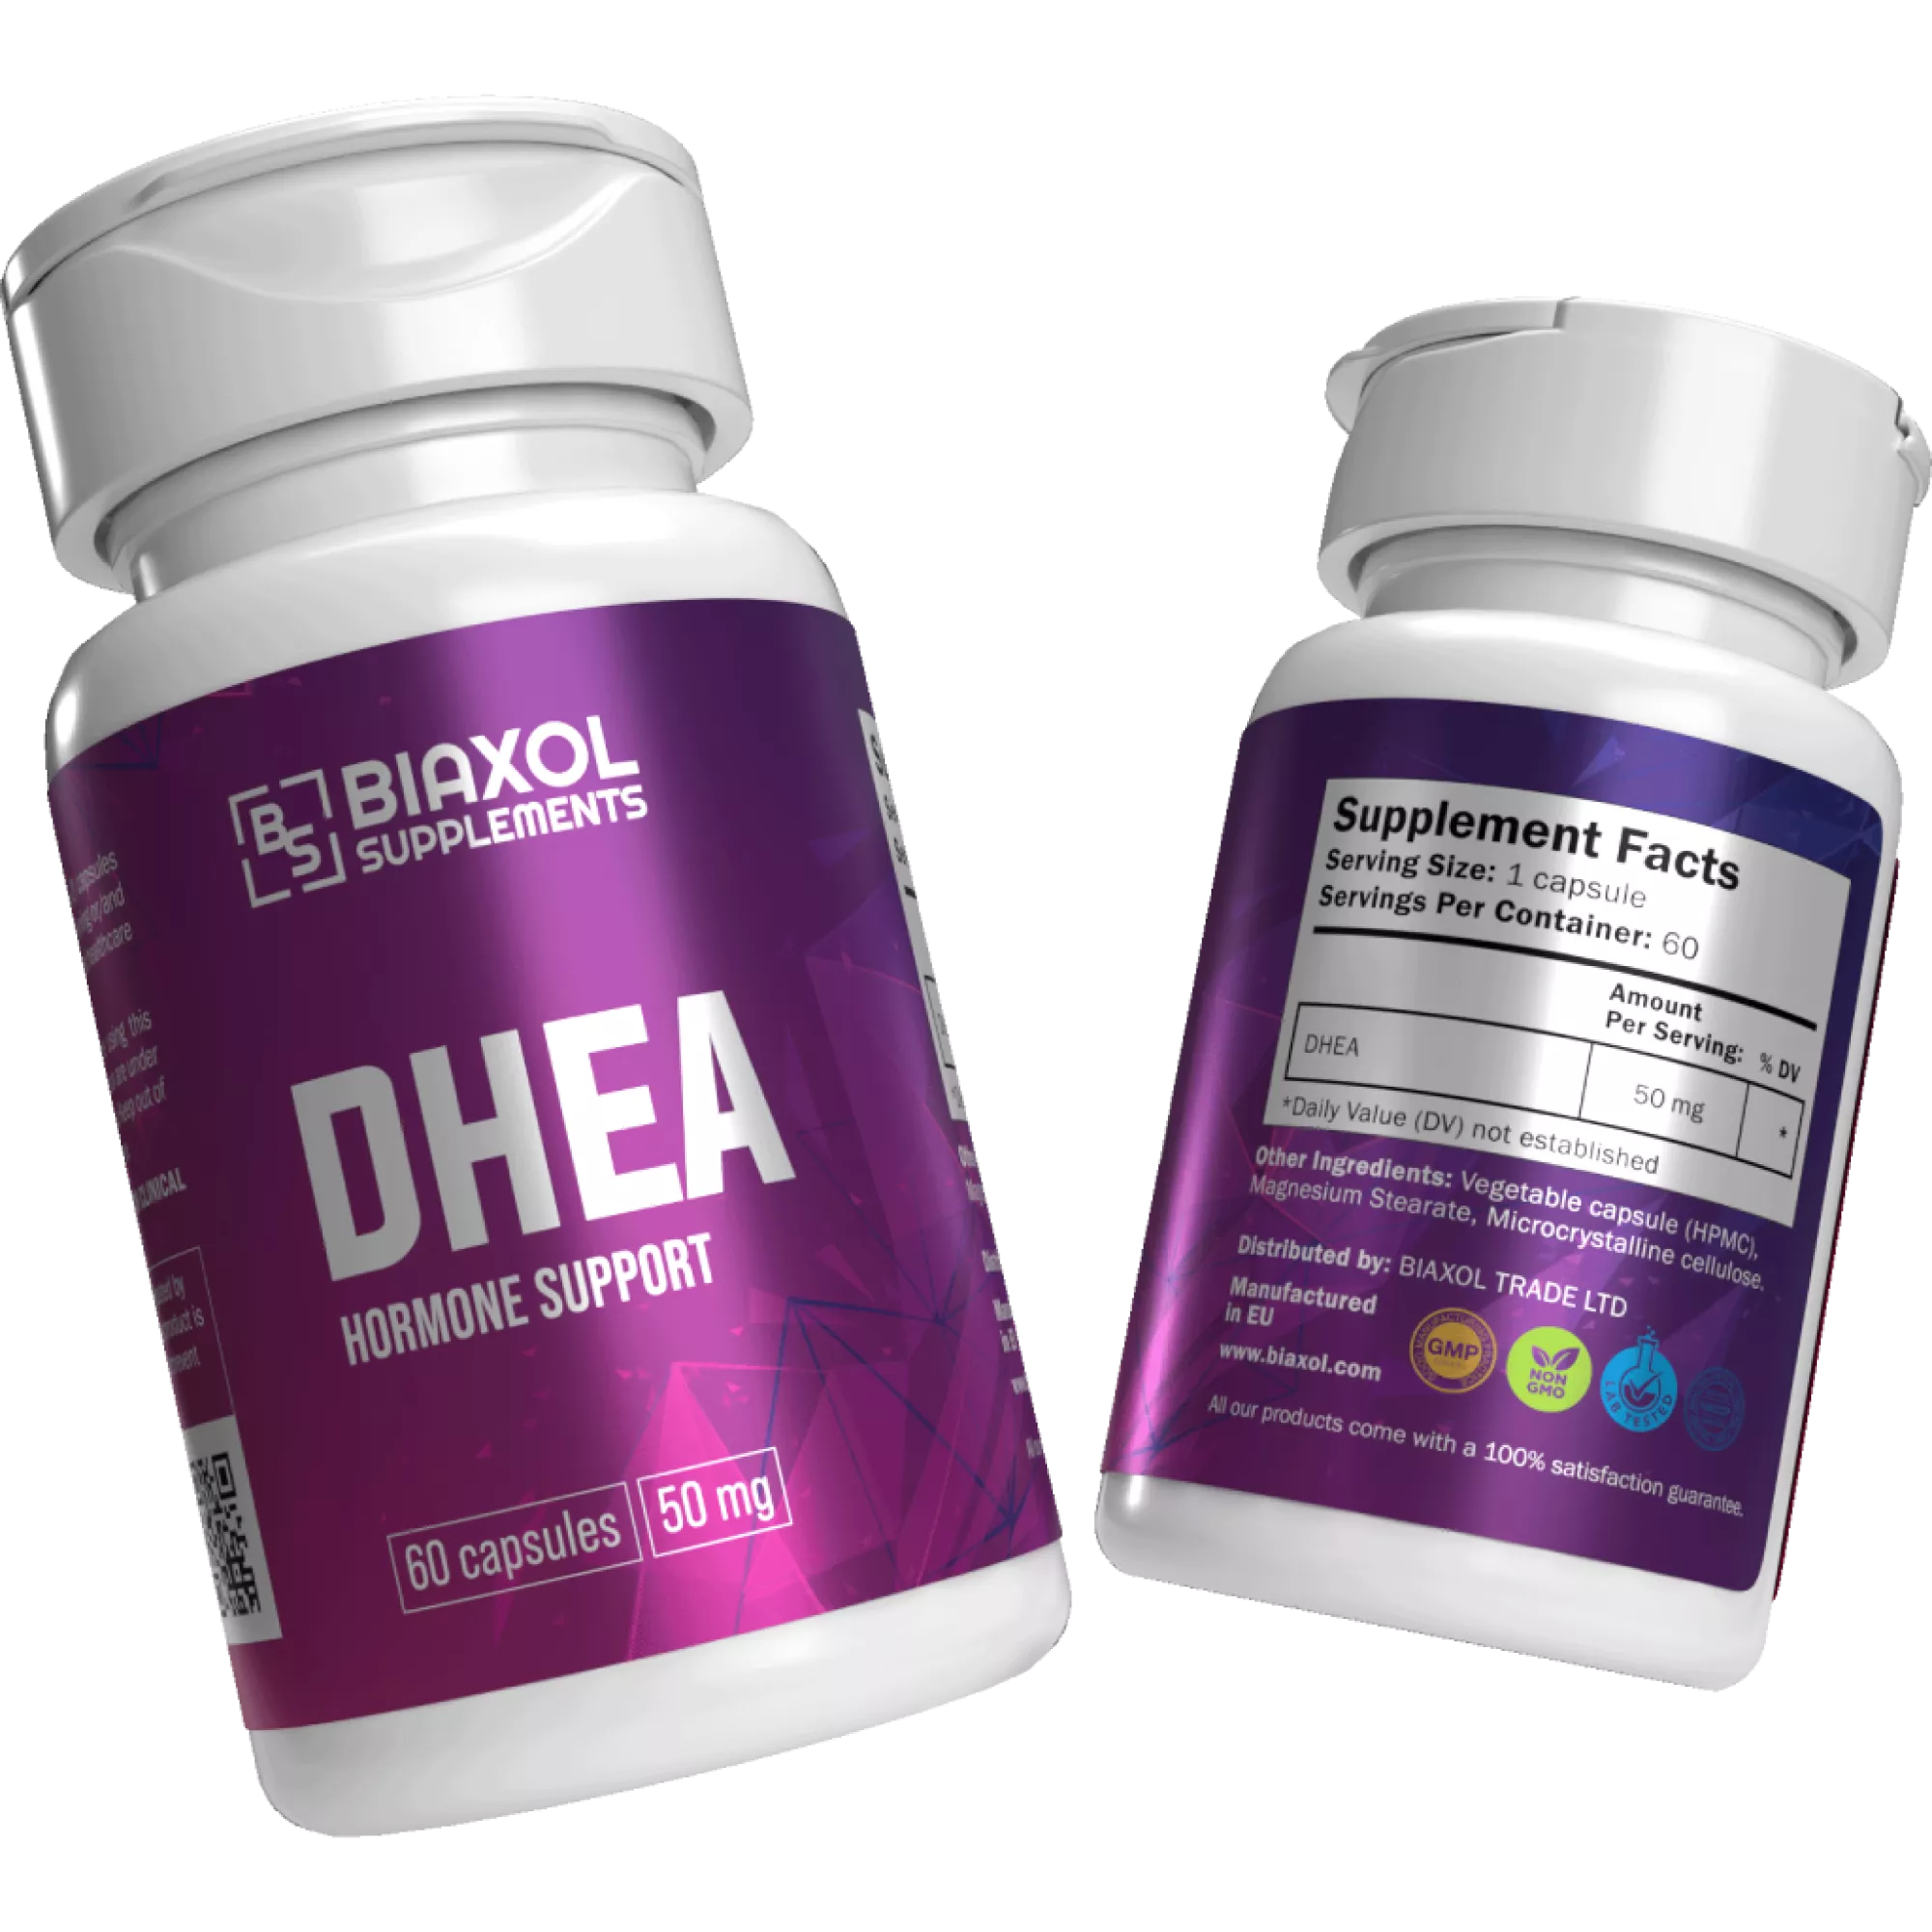 DHEA (Hormone Support), Biaxol, Buy Steroids Online - www.deuspower.shop